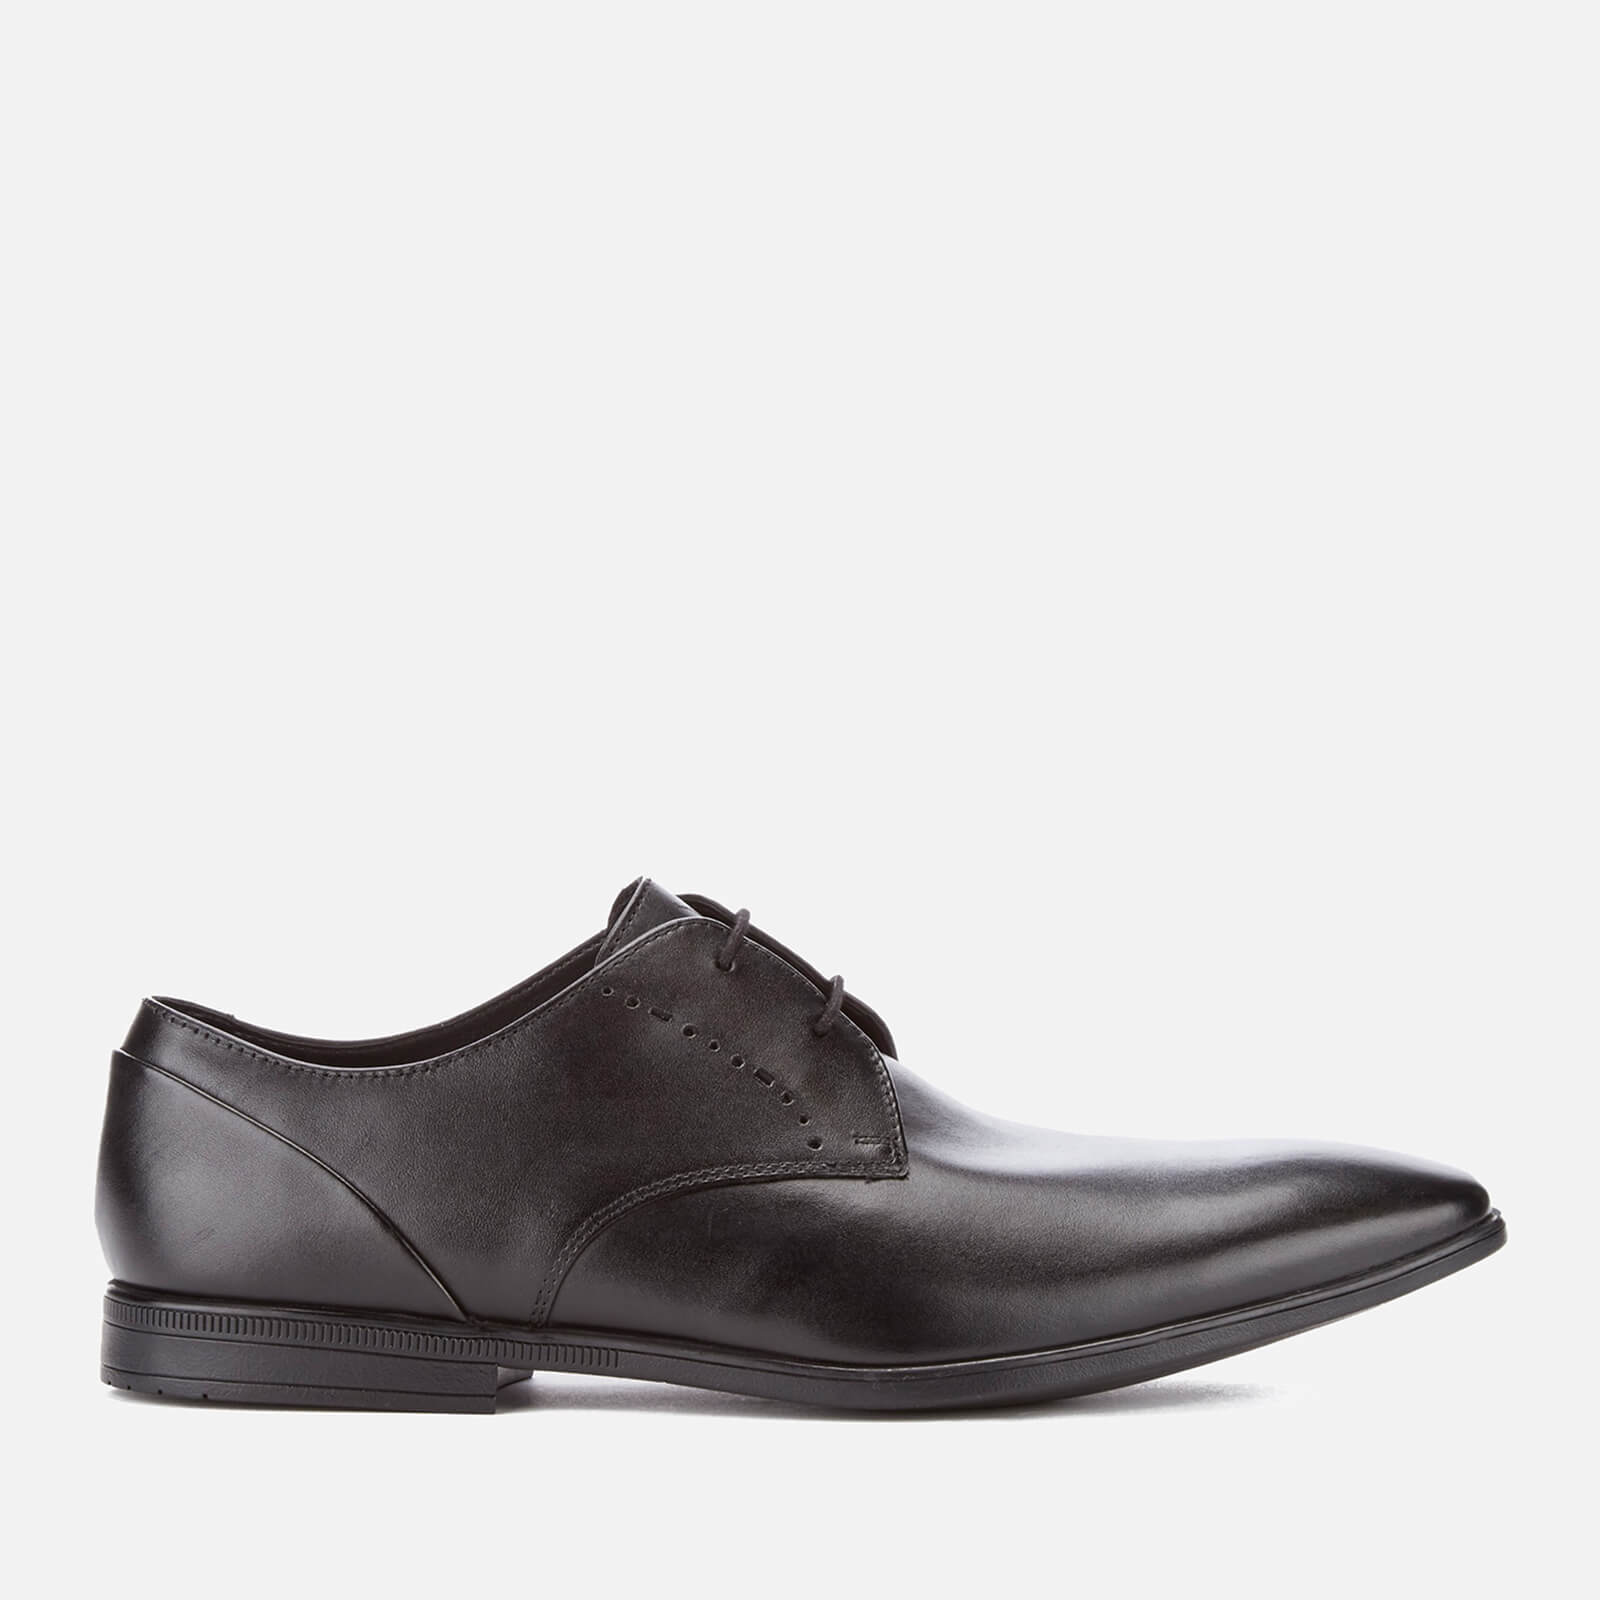 clarks men's bampton lace formal shoes